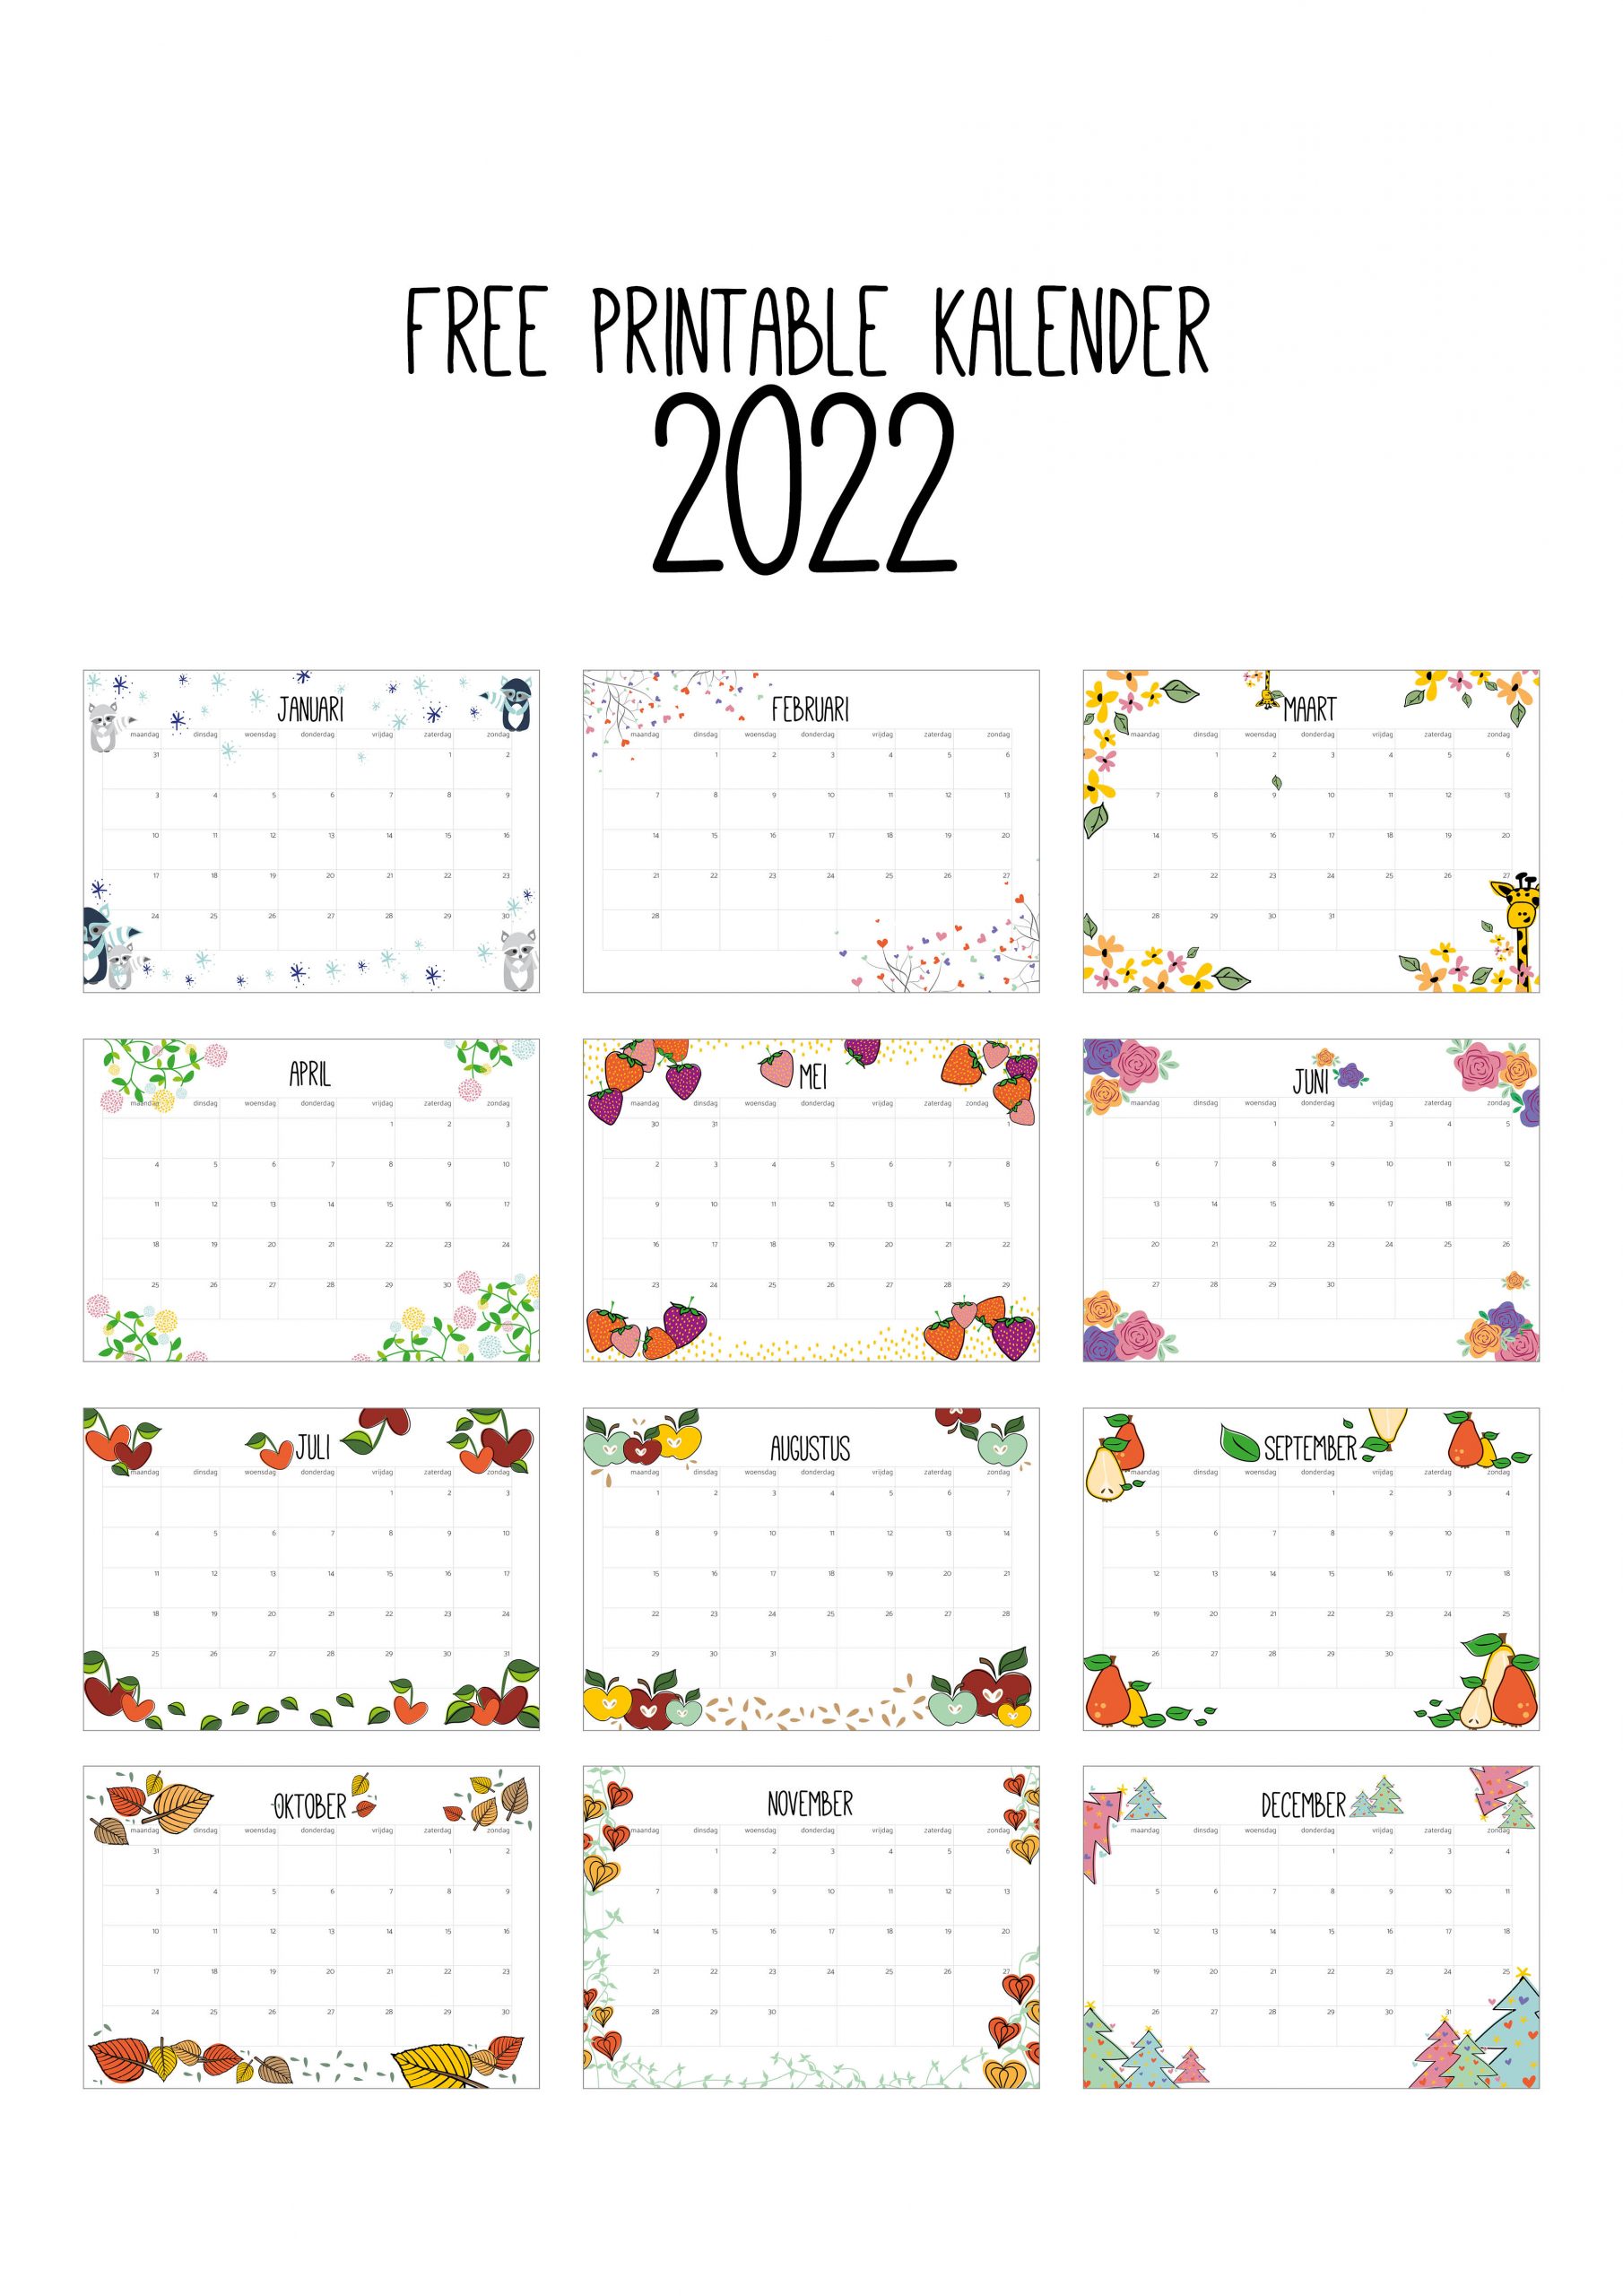 sticker Rust uit bagage Free Printable kalender 2022 - Hip & Hot - blogazine